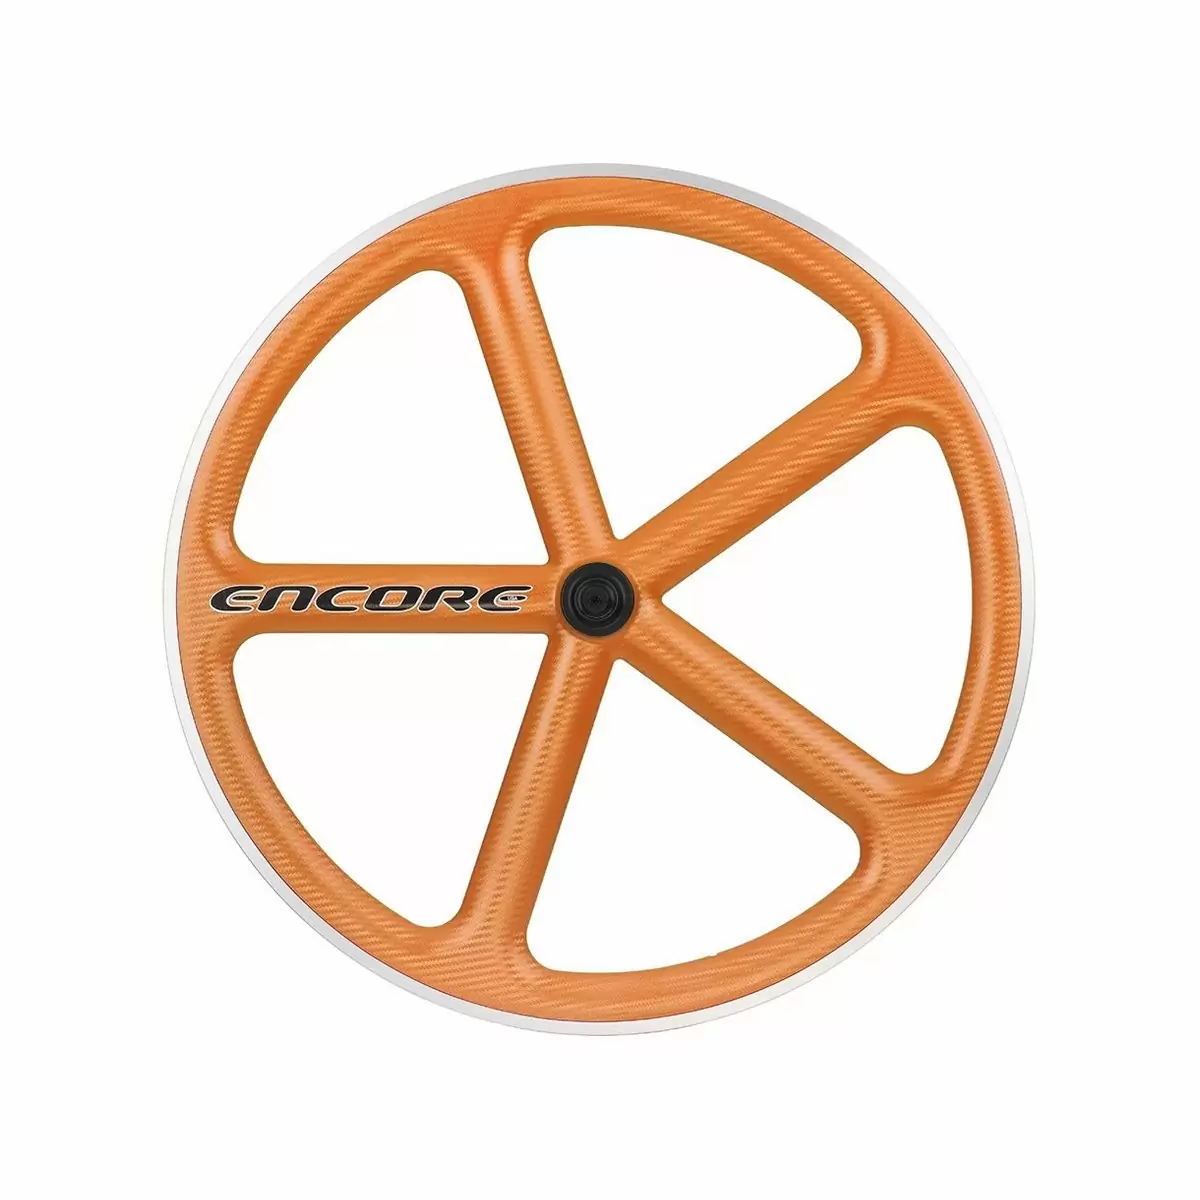 rear wheel 700c track 5 spokes carbon weave orange msw - image